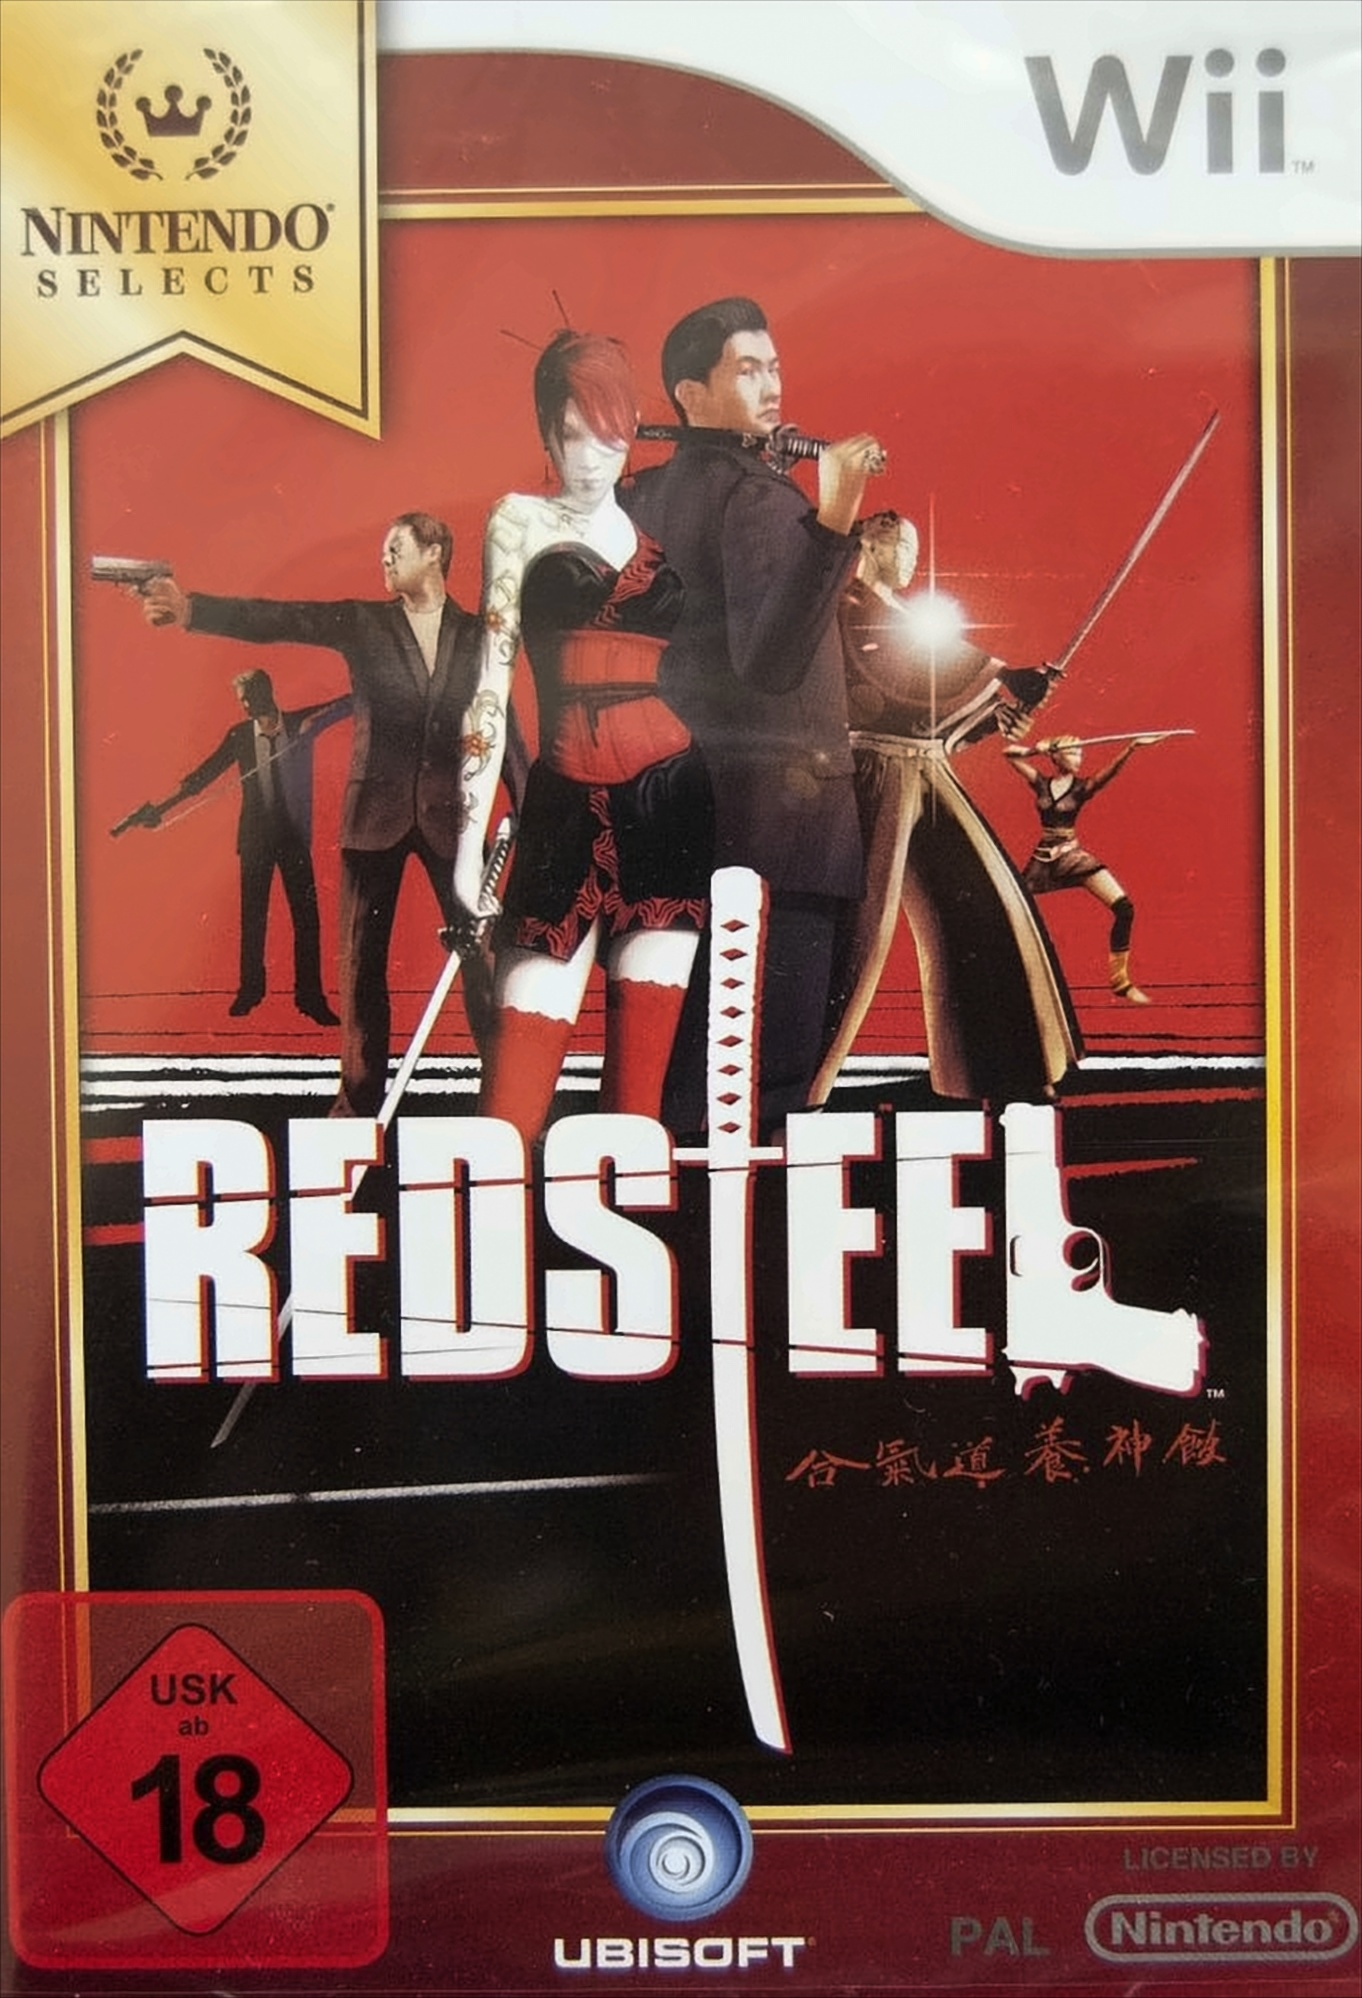 Steel Wii] Nintendo Red Selects - [Nintendo -